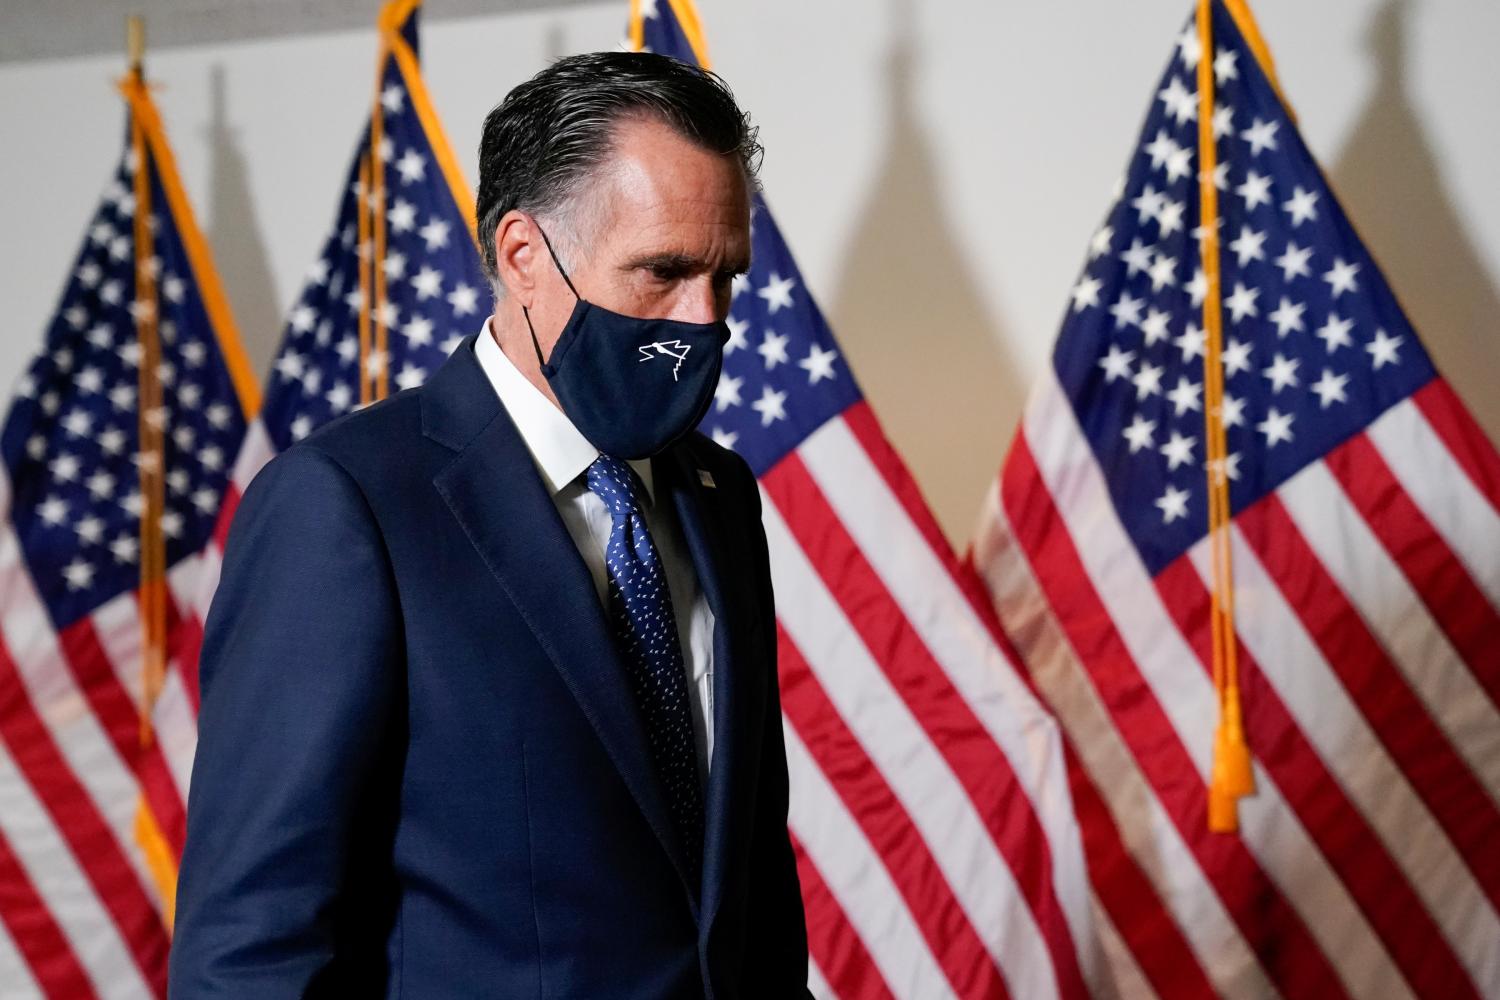 U.S. Senator Mitt Romney (R-UT) arrives to a luncheon on Capitol Hill in Washington, U.S., September 23, 2020. REUTERS/Erin Scott